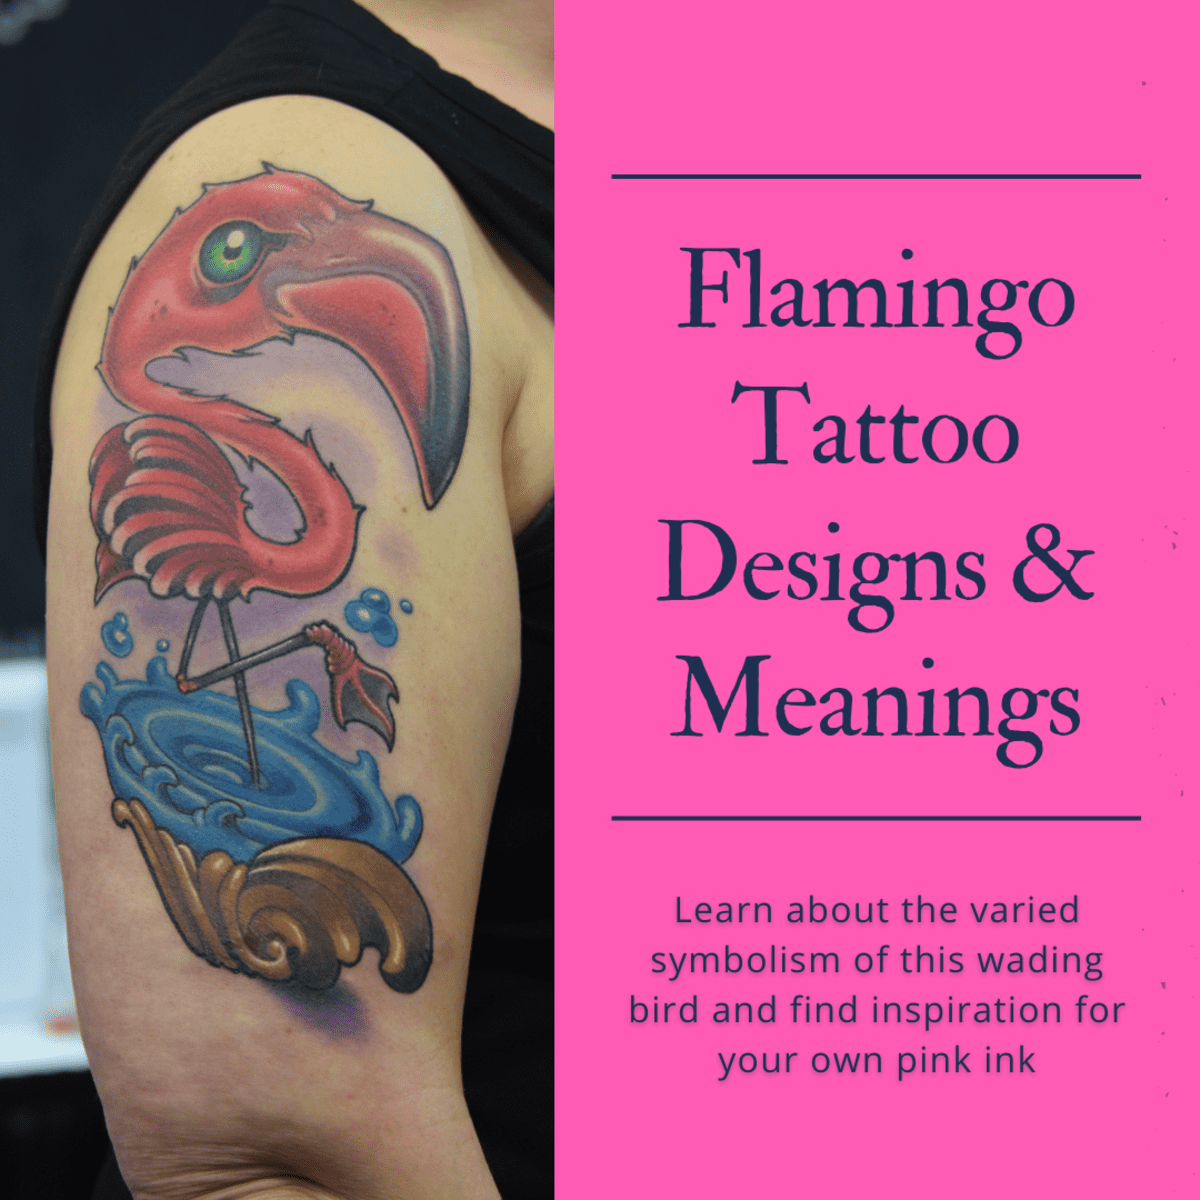 Flamingo tattoo meaning swinging